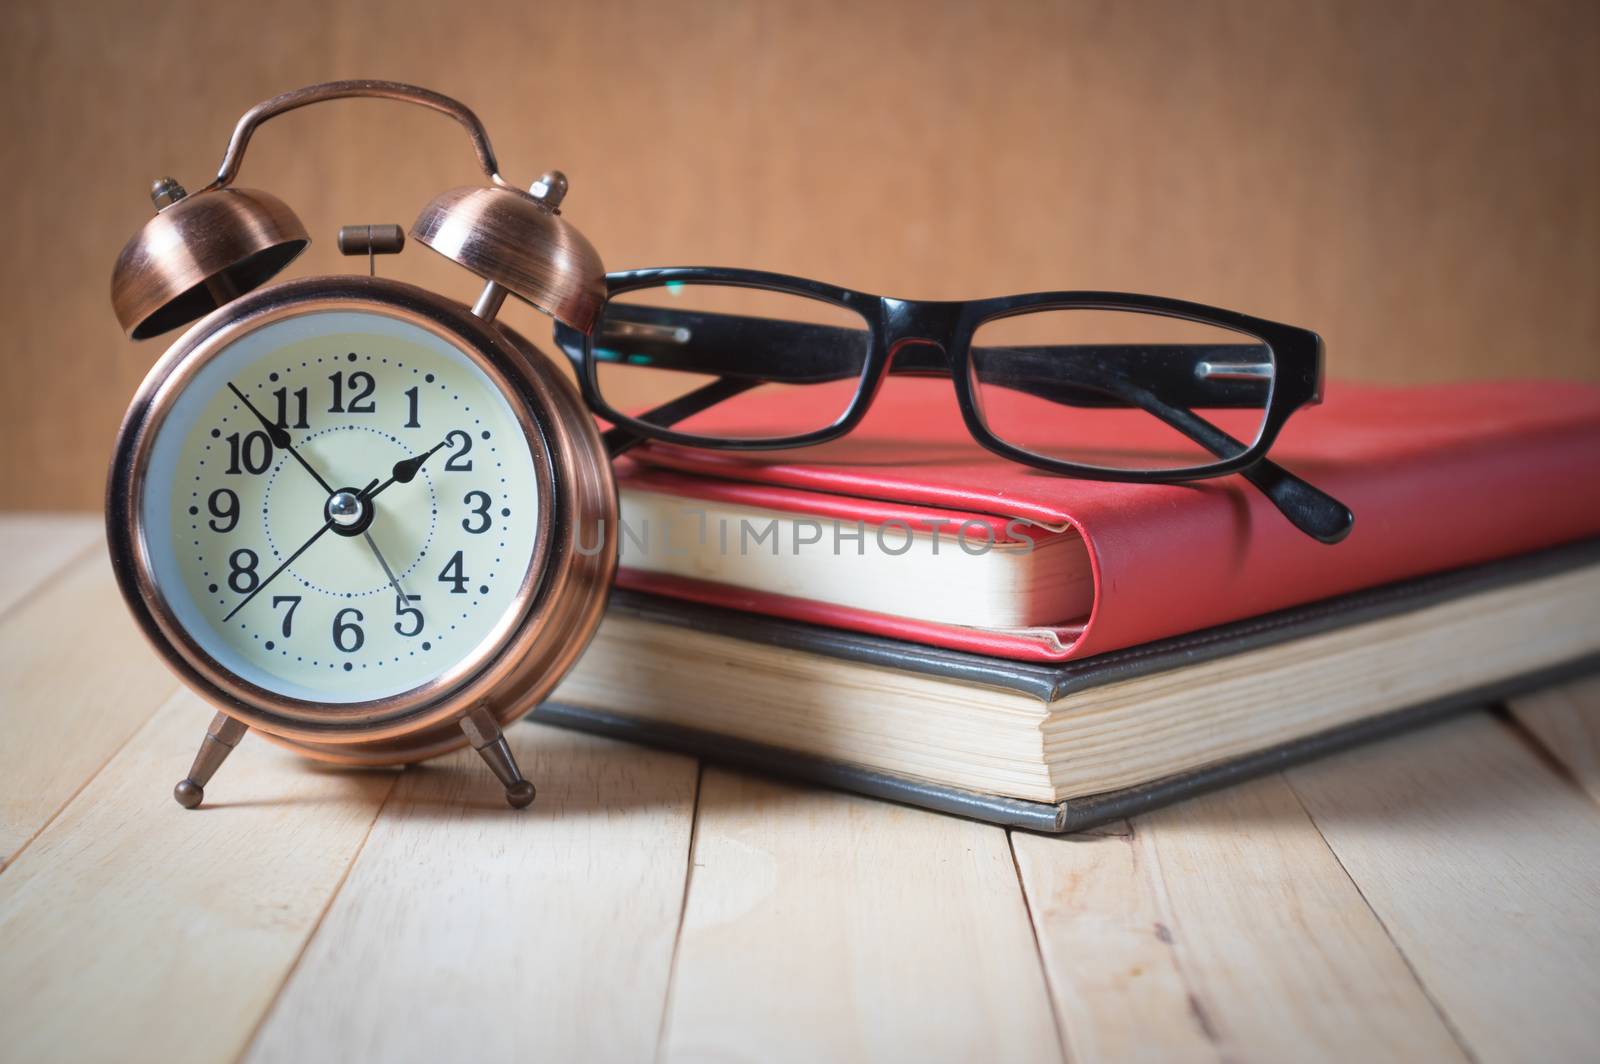 Retro alarm clock and book with glasses.